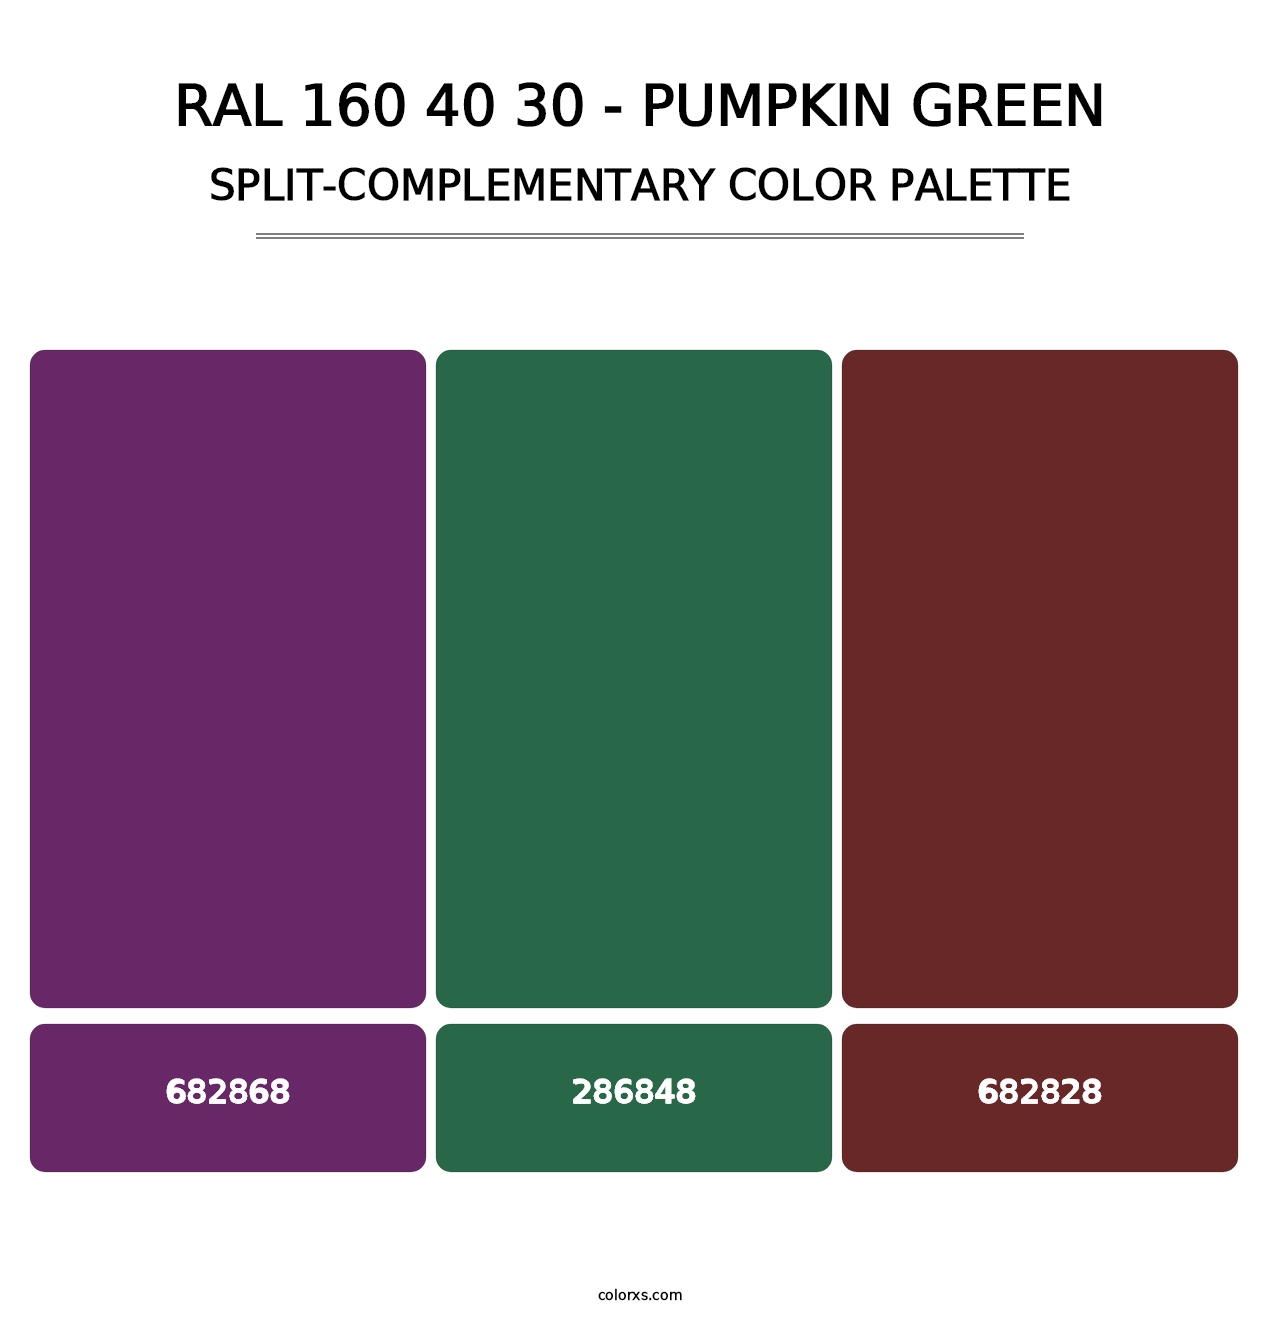 RAL 160 40 30 - Pumpkin Green - Split-Complementary Color Palette